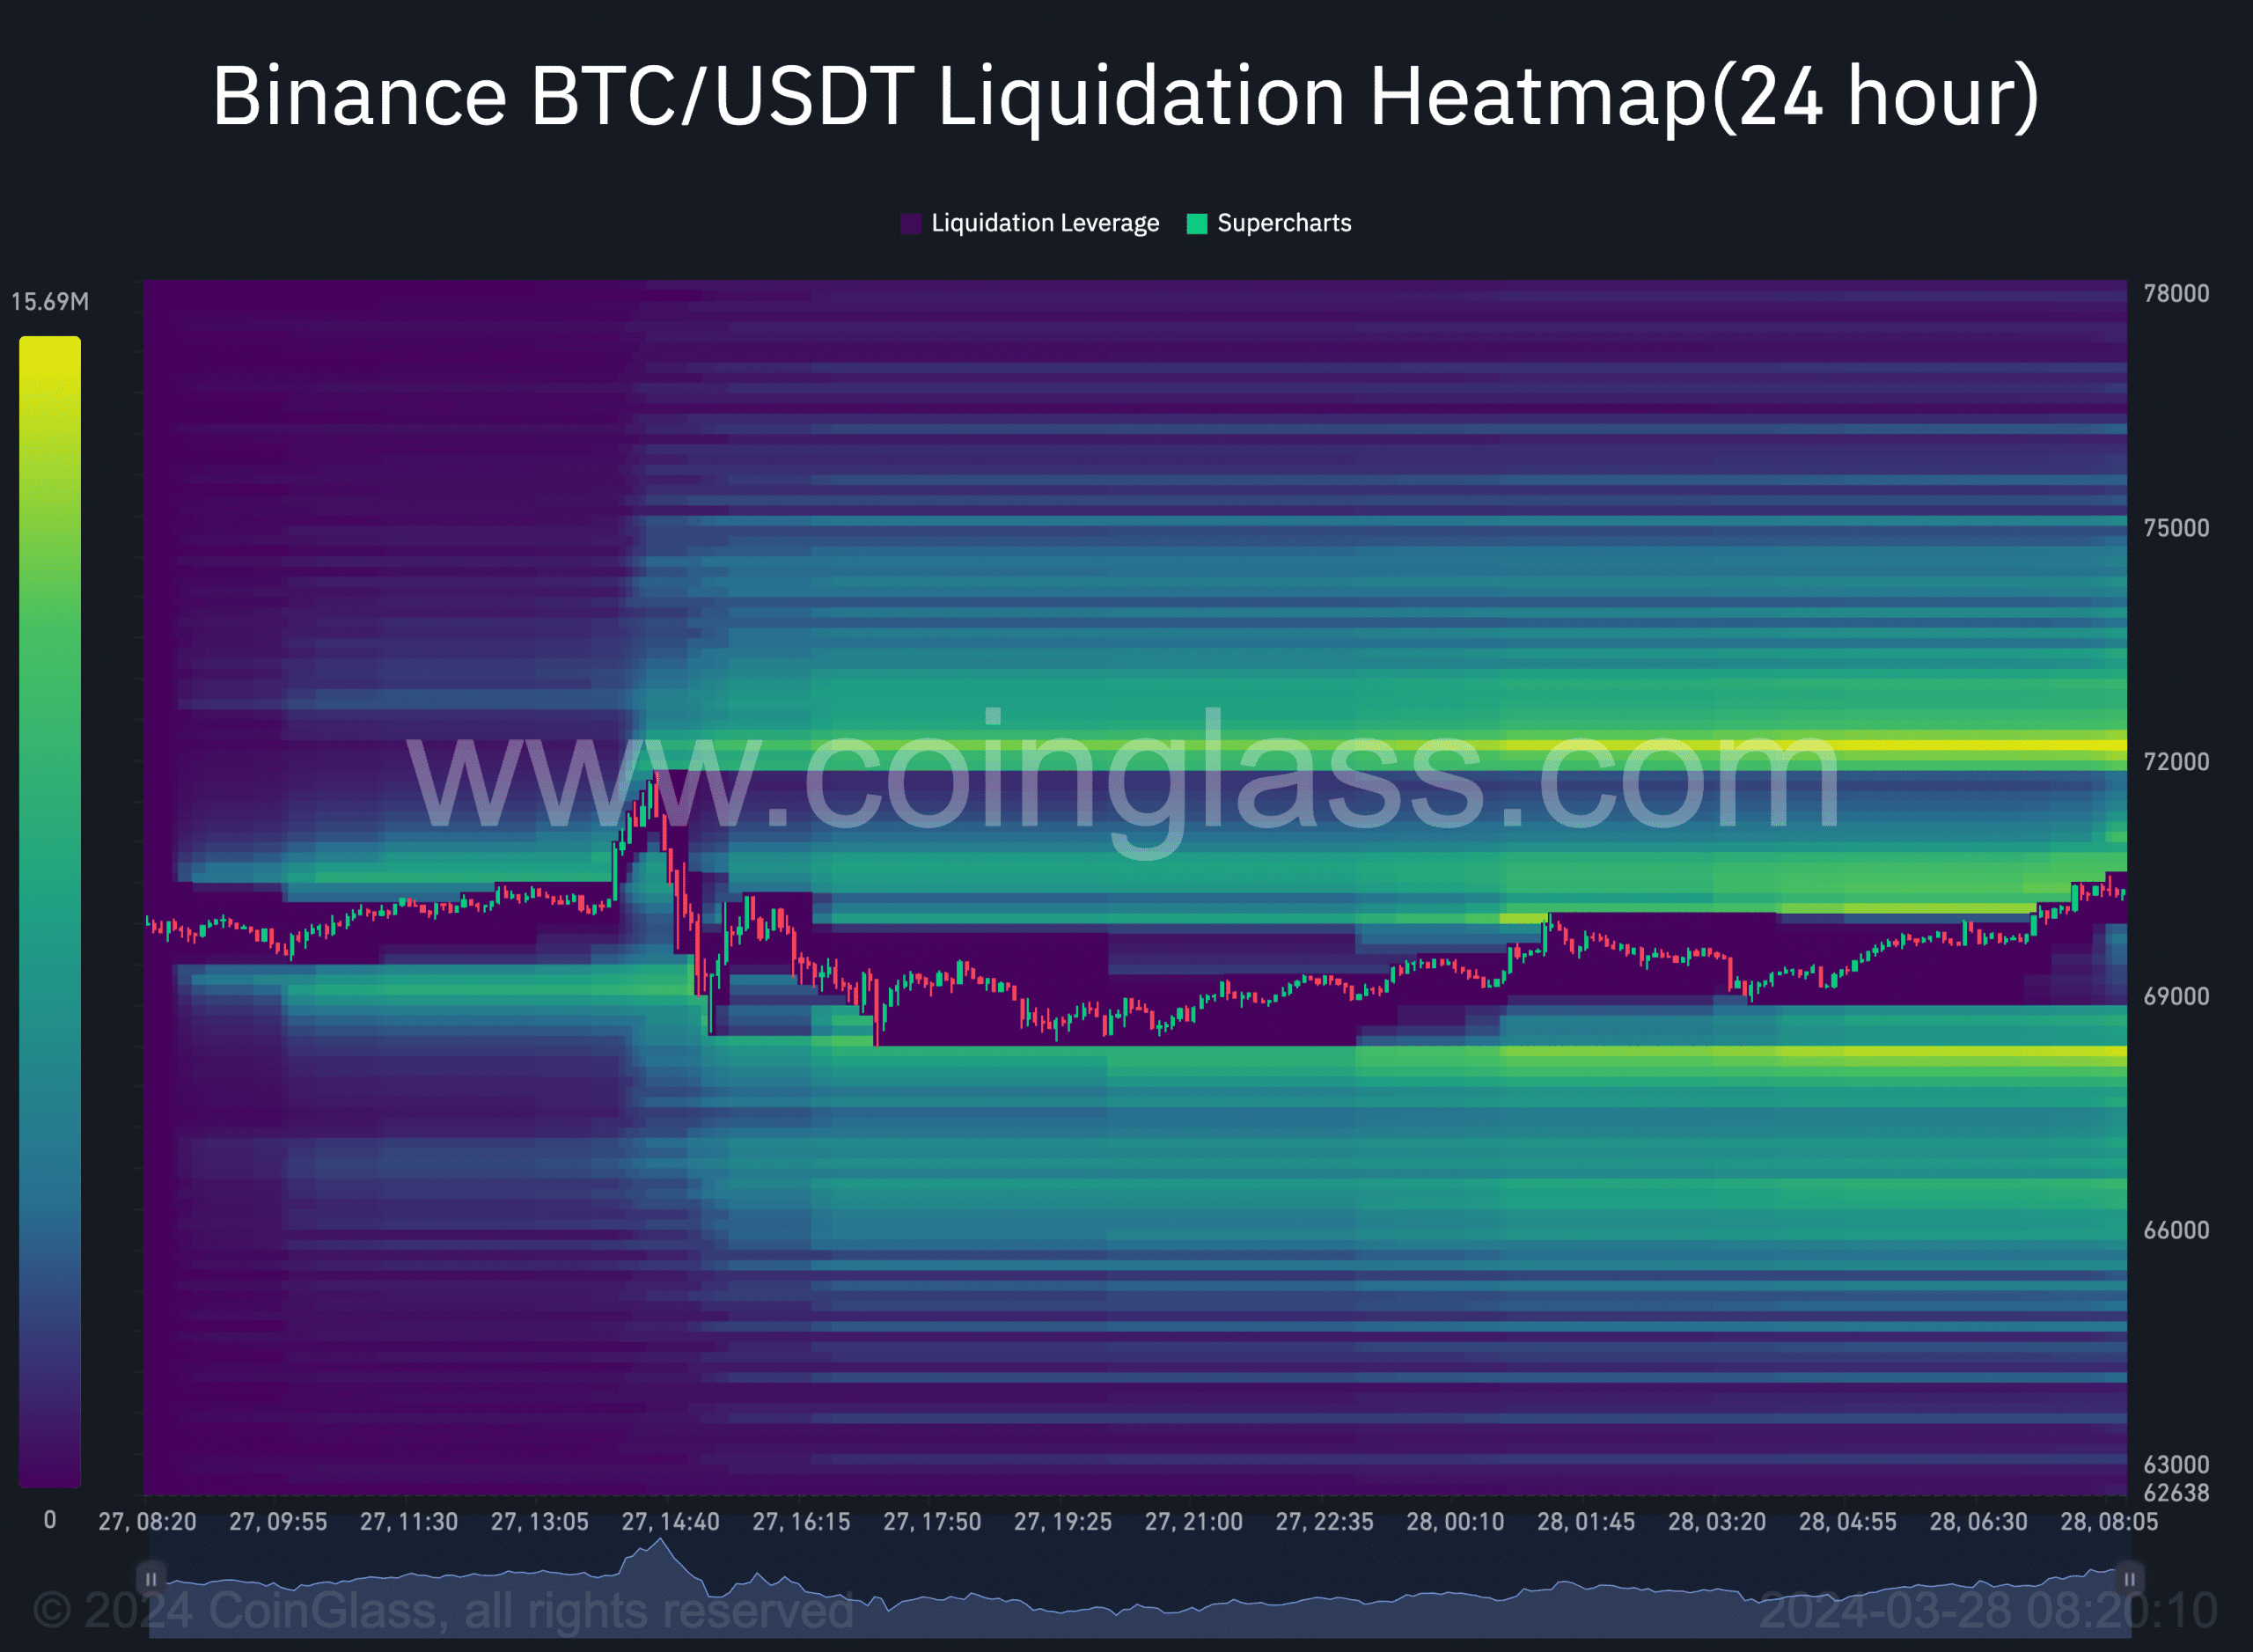 Bitcoin's liquidation heatmap suggesting more short liquidations